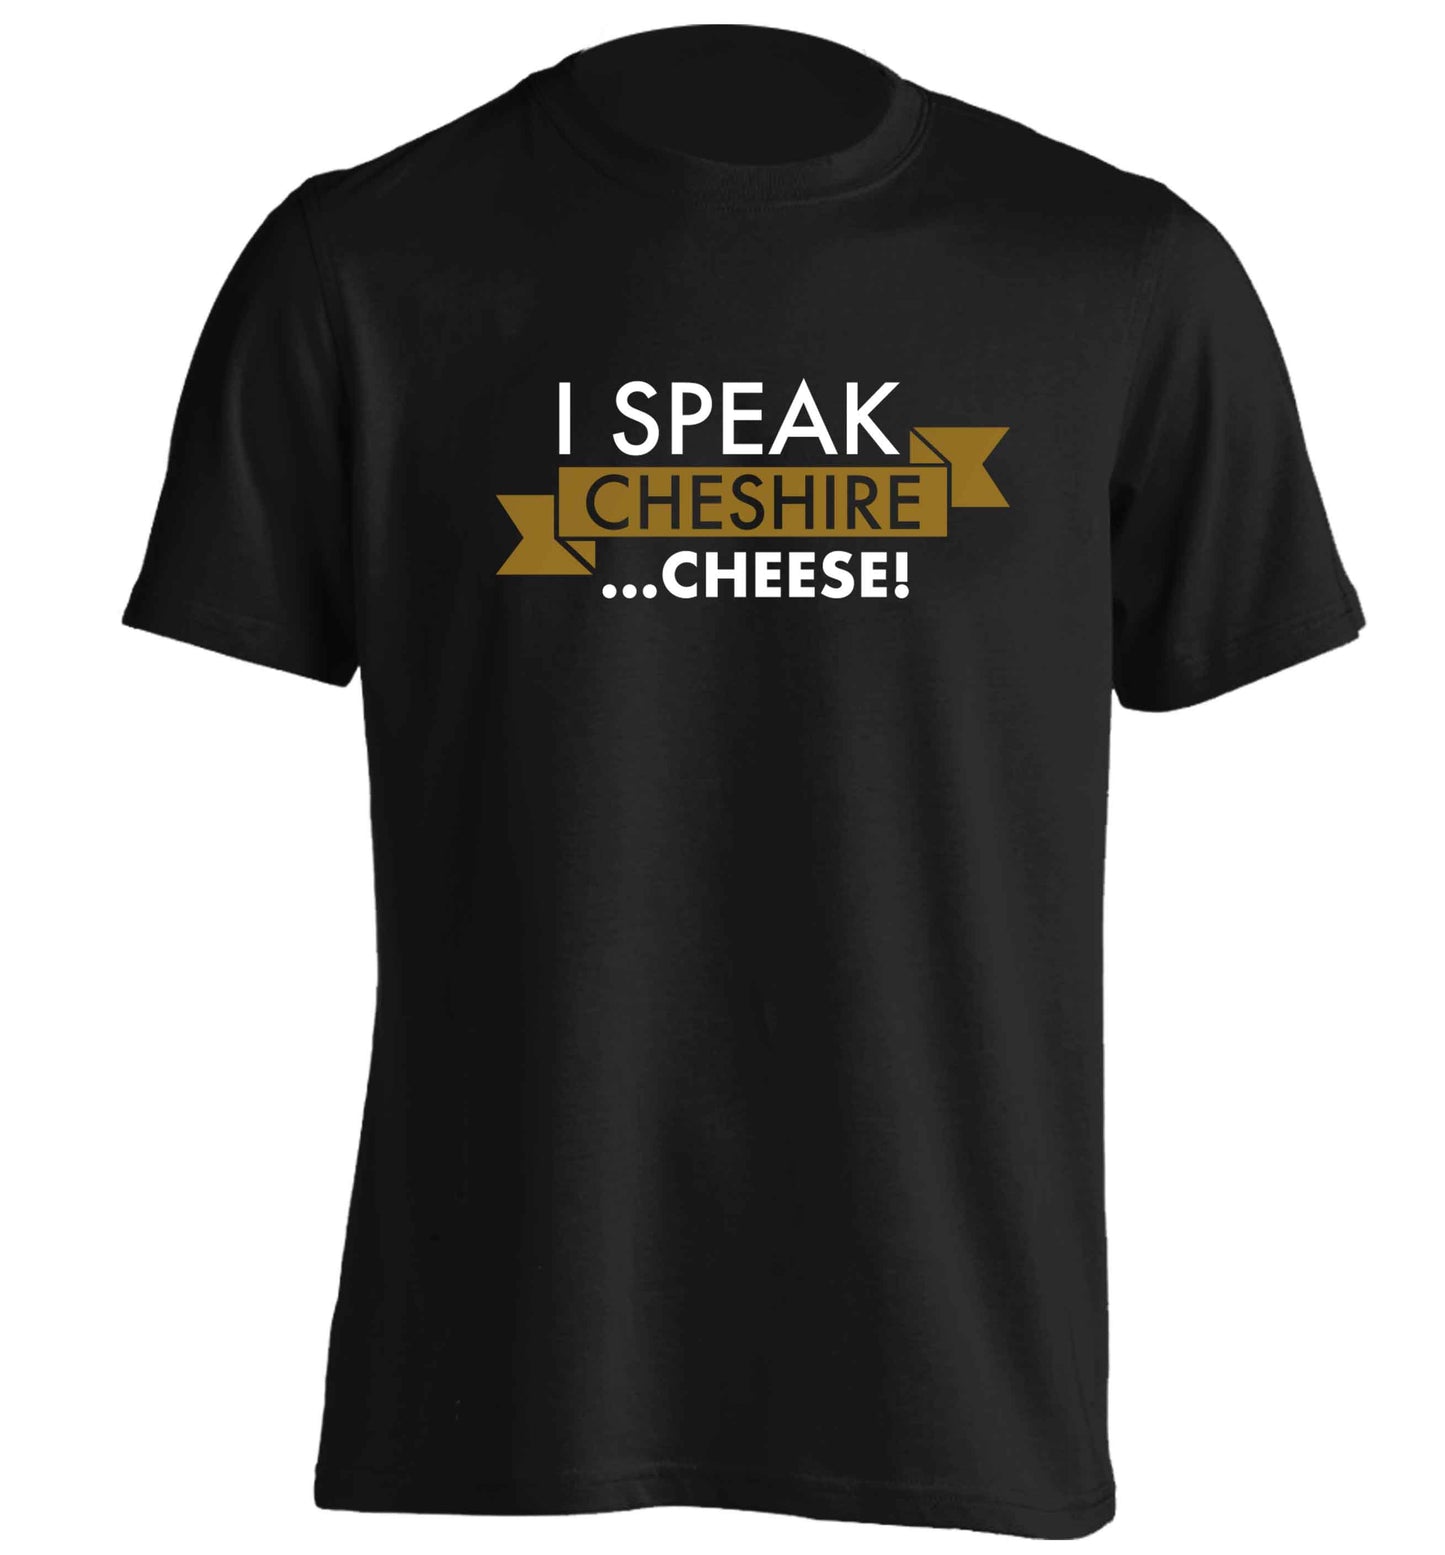 I speak Cheshire cheese adults unisex black Tshirt 2XL